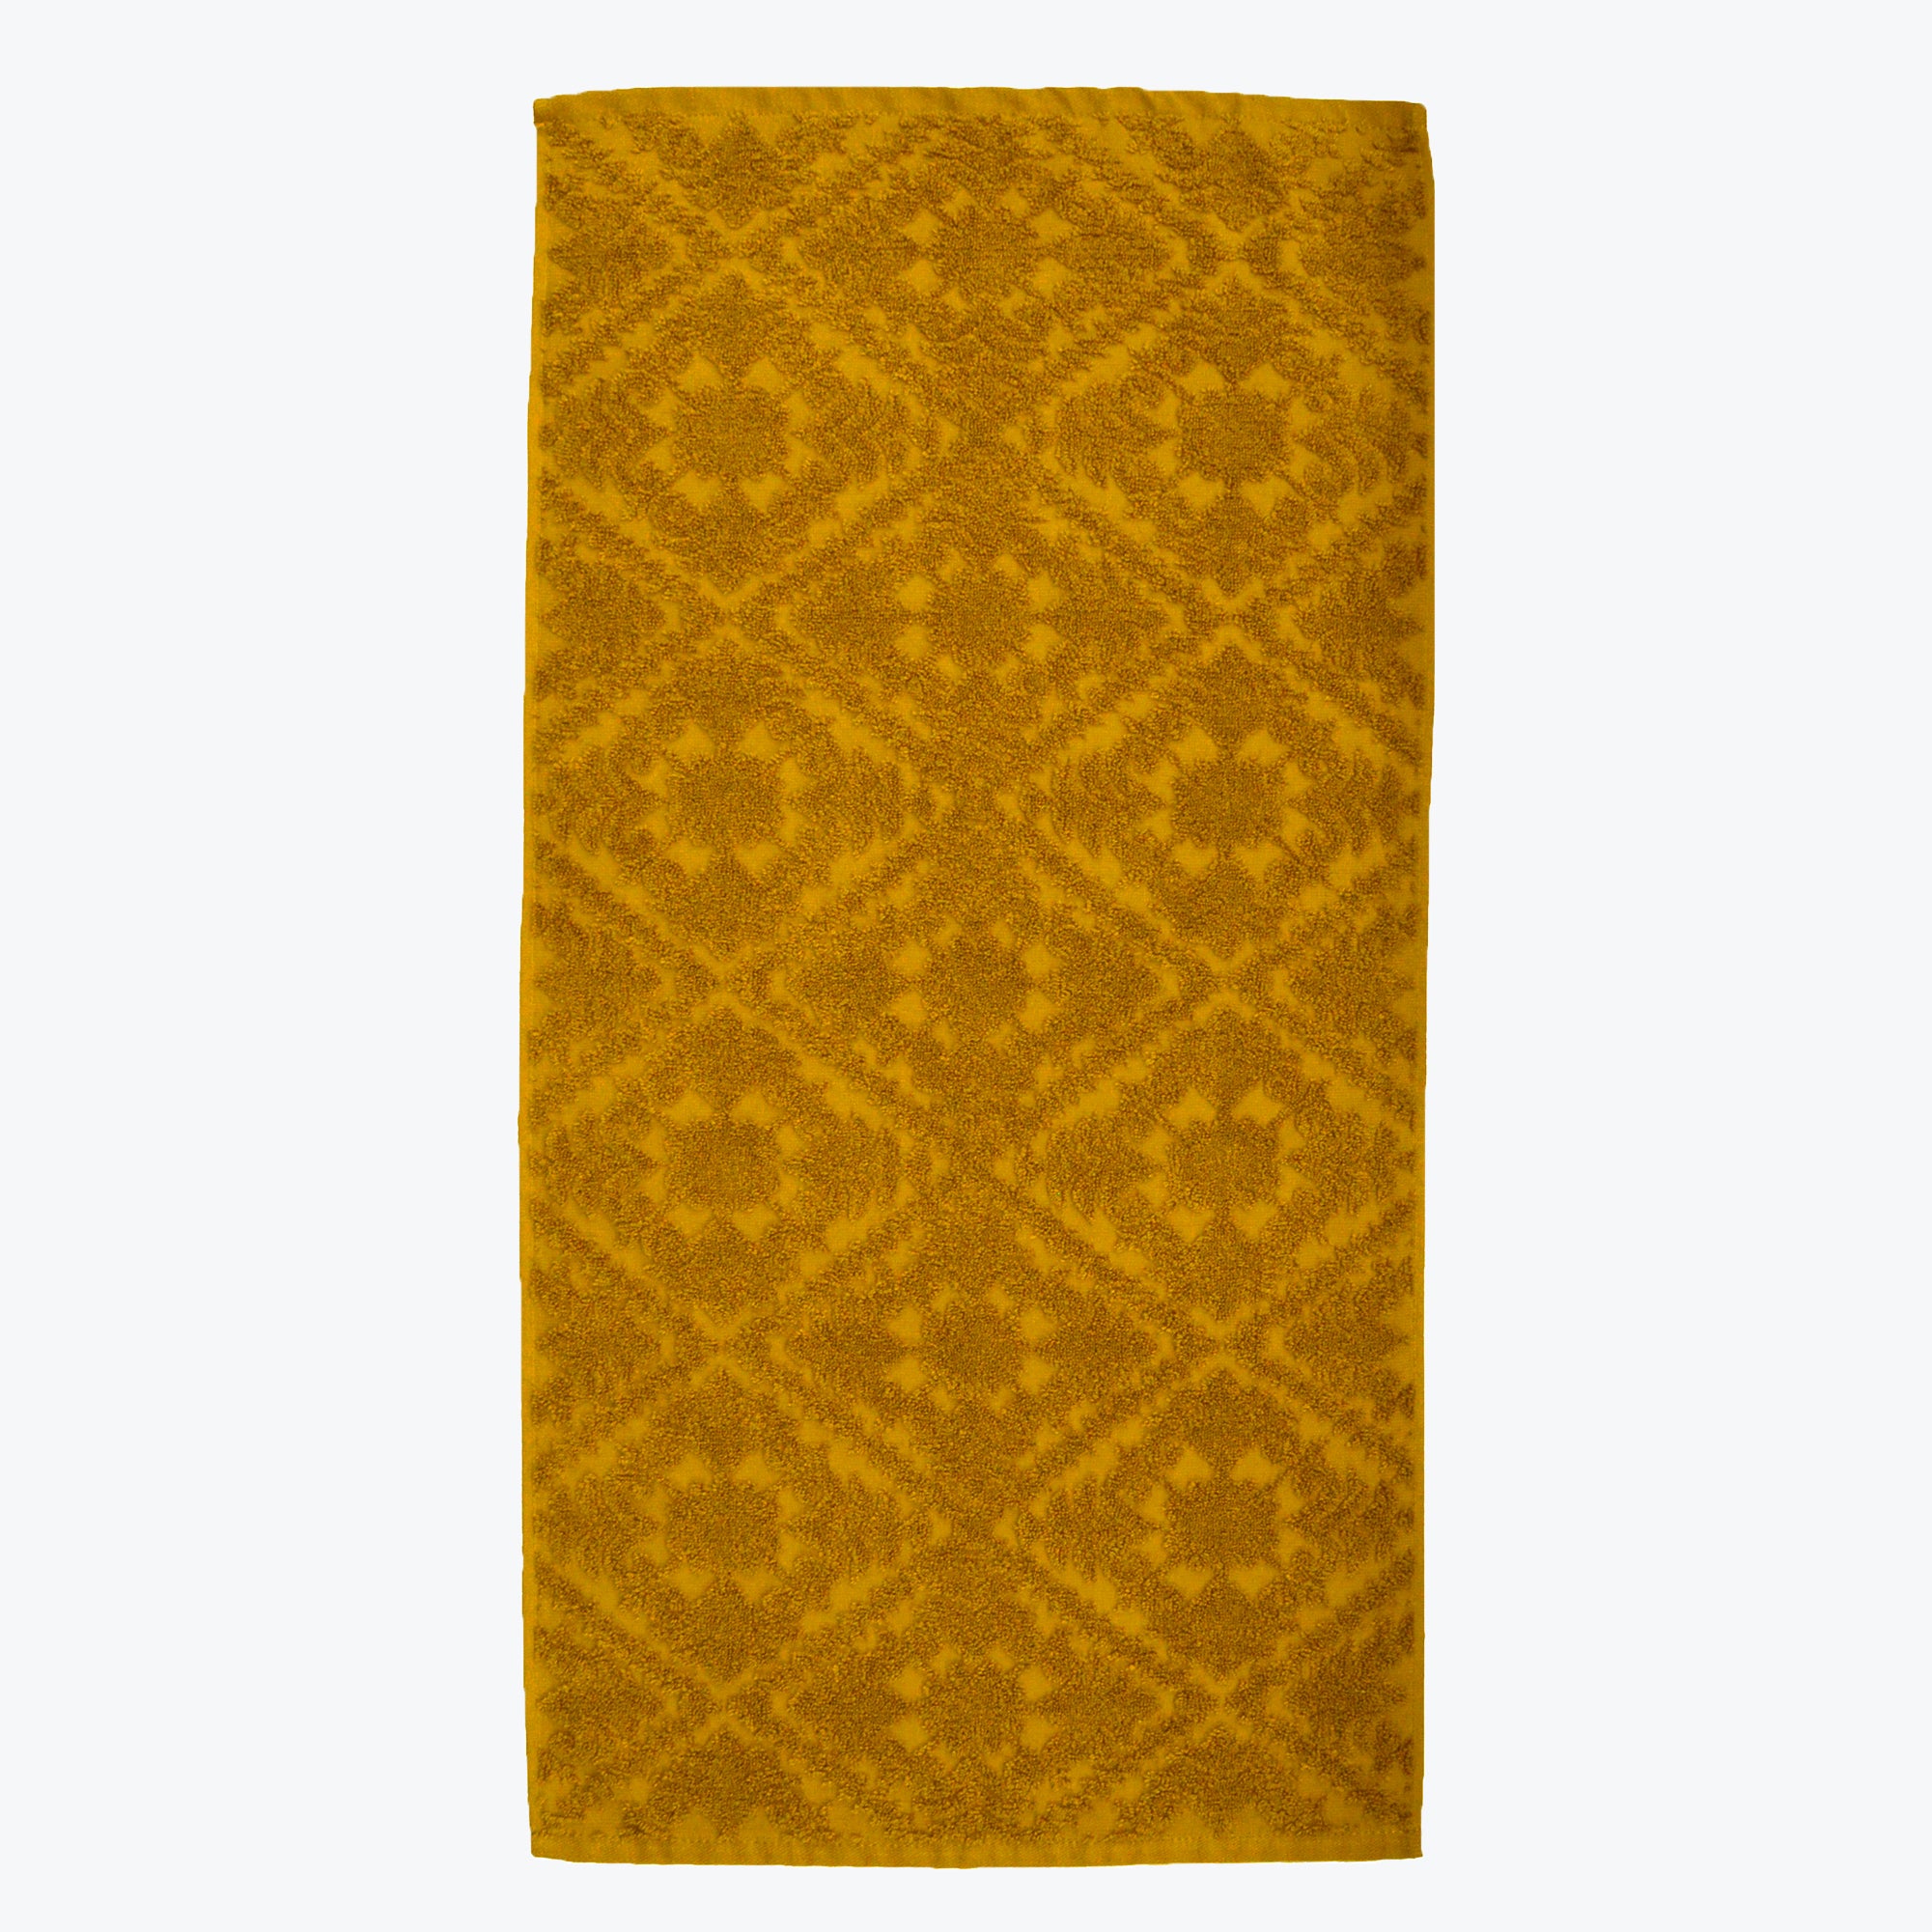 Tumeric Yellow Bath Towel - Textured Country House Design